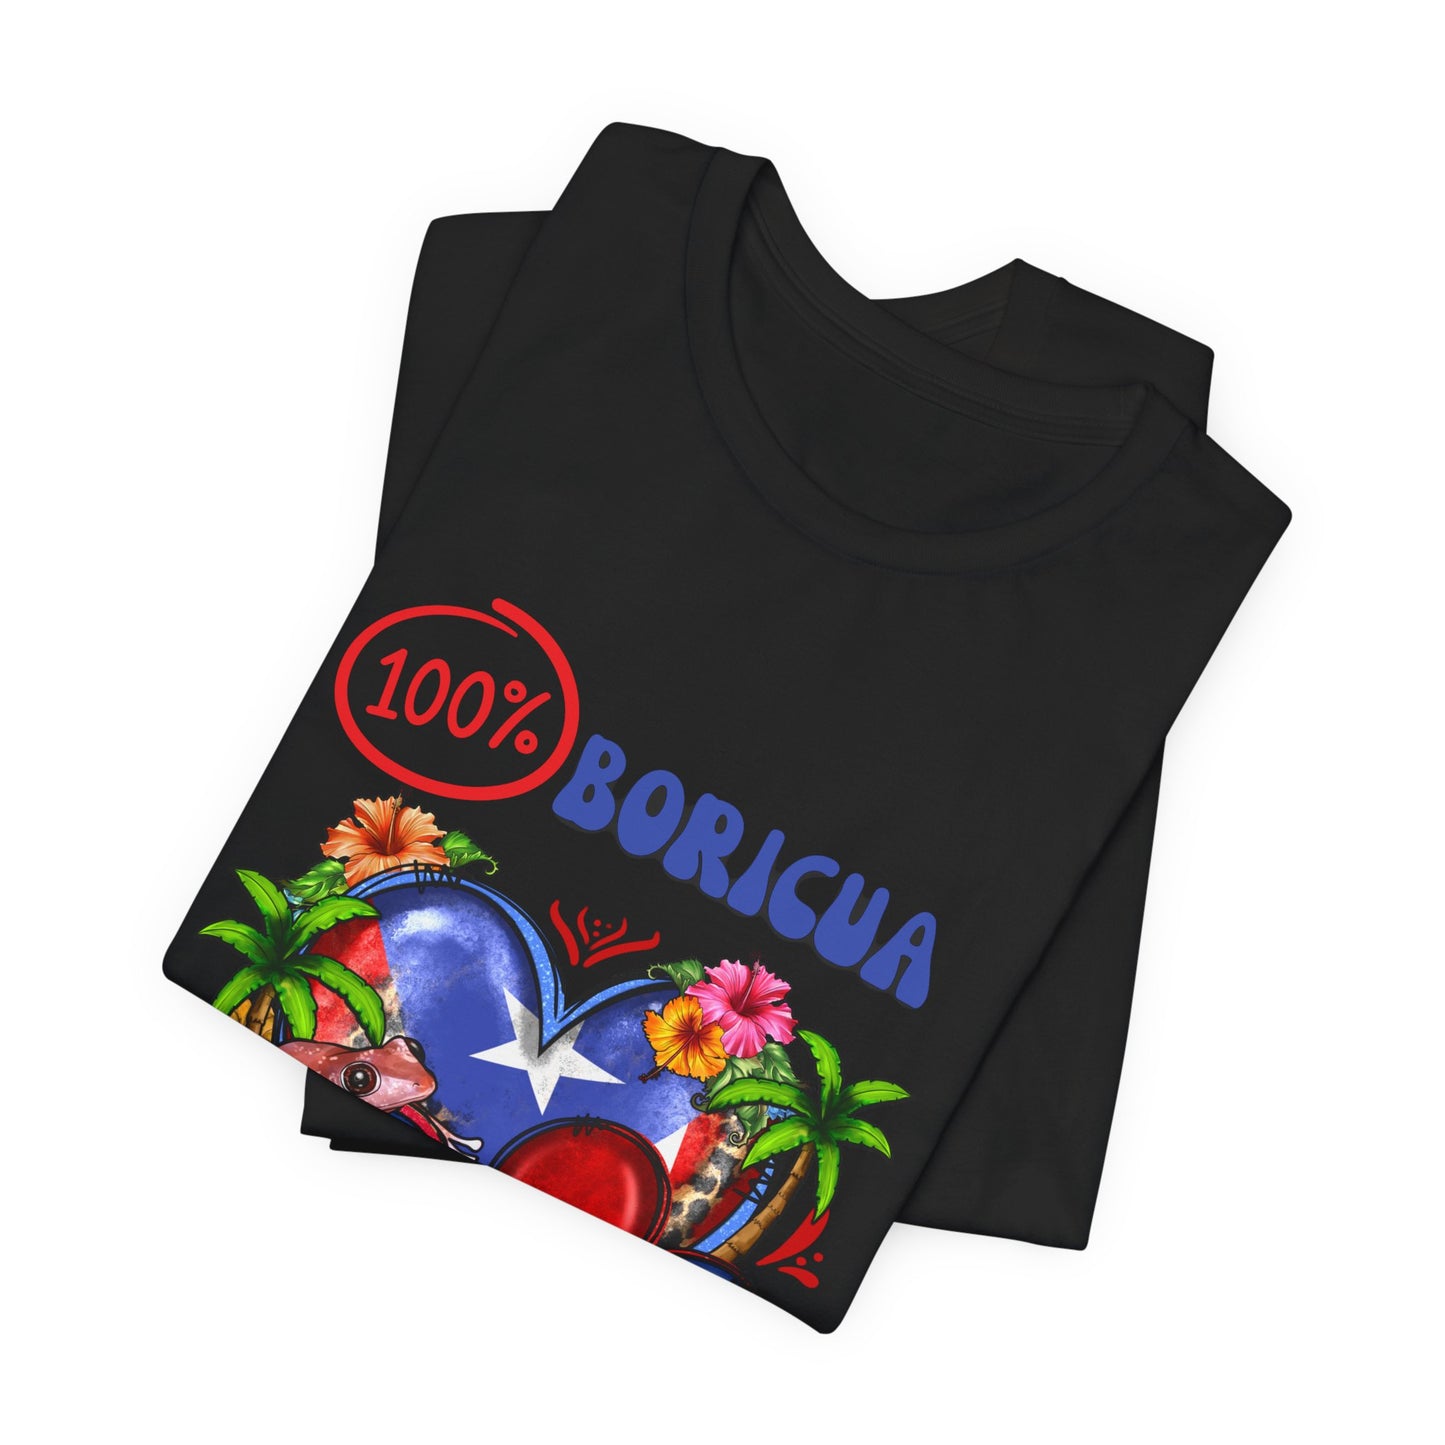 100% BORICUA PUERTO RICO Unisex Shirt Puerto Rican Elements 4everBoricua™️